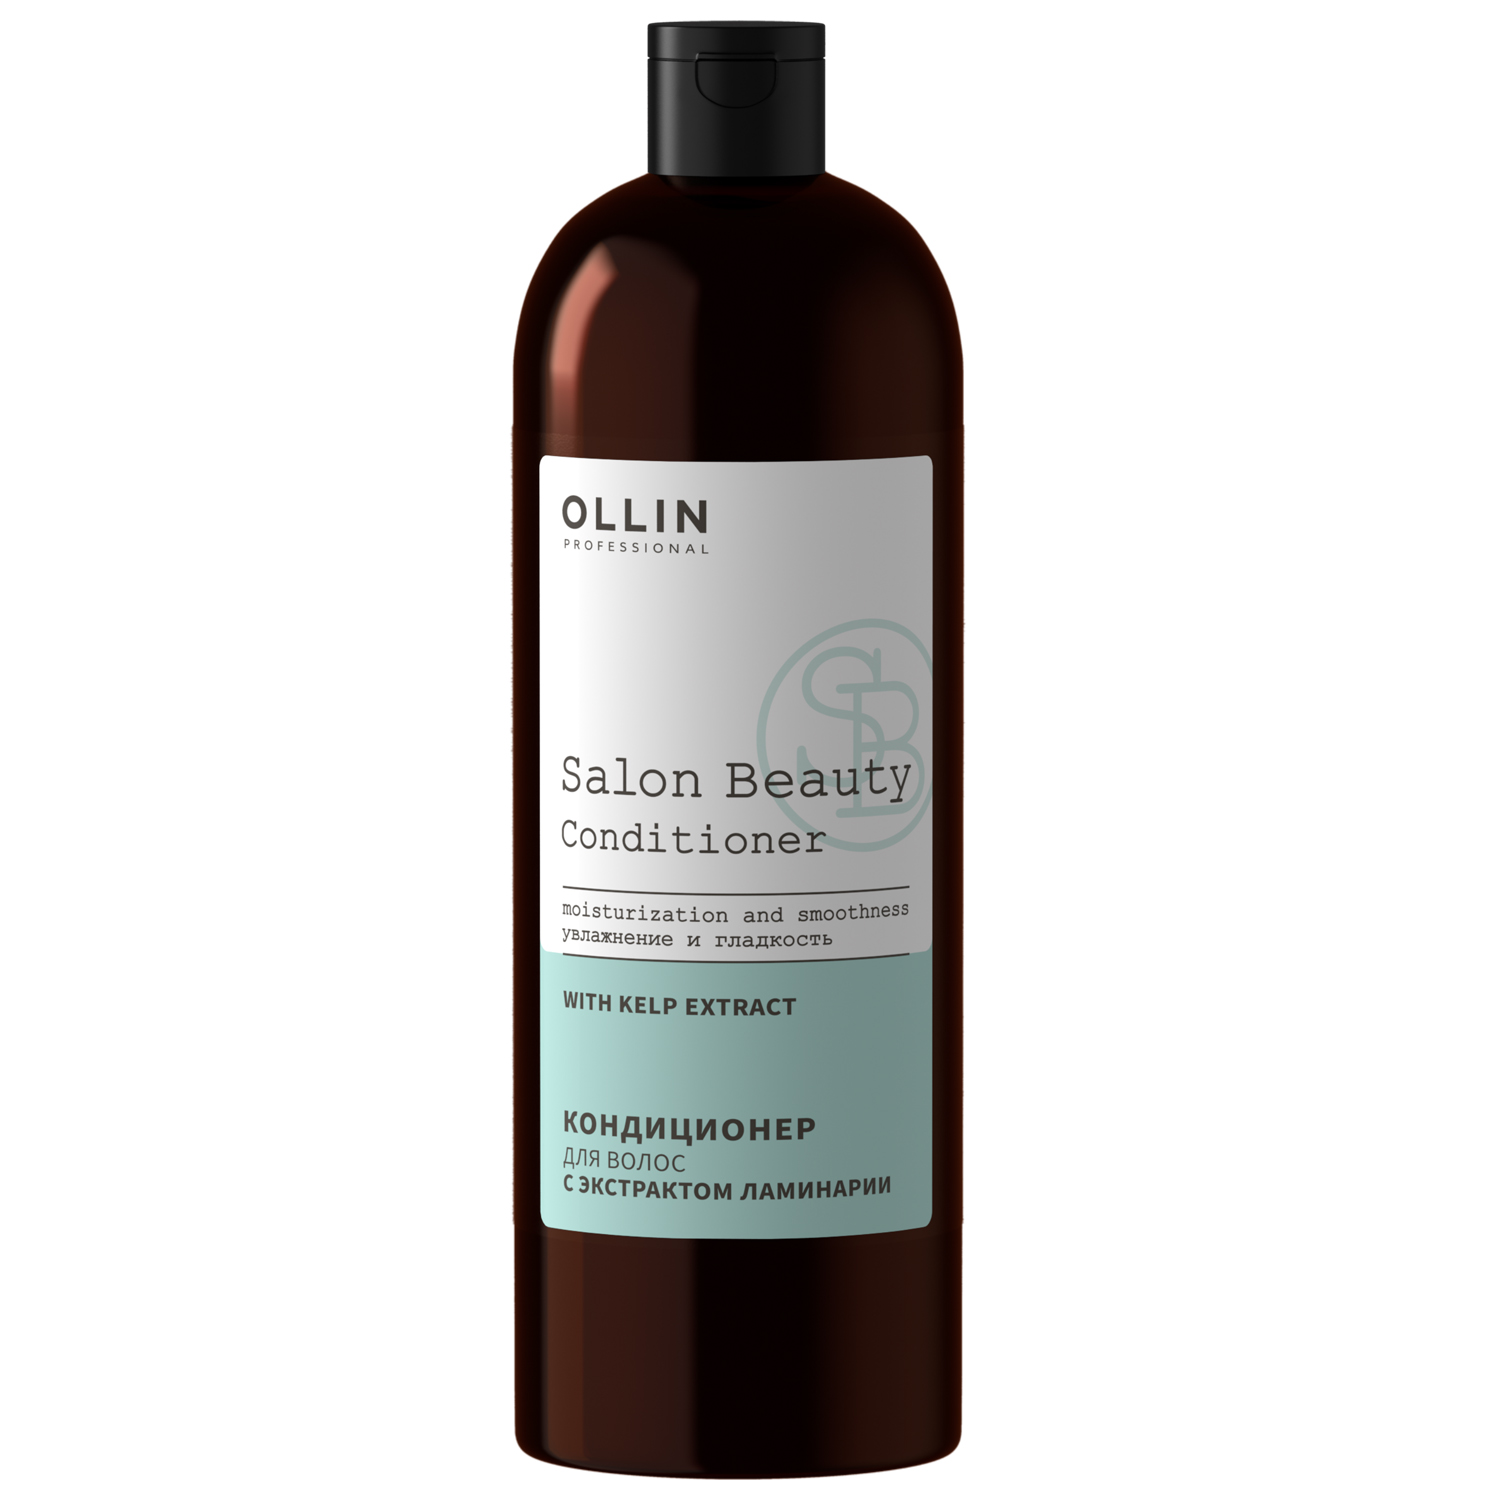 Ollin Professional Кондиционер для волос с экстрактом ламинарии, 1000 мл (Ollin Professional, Salon Beauty)